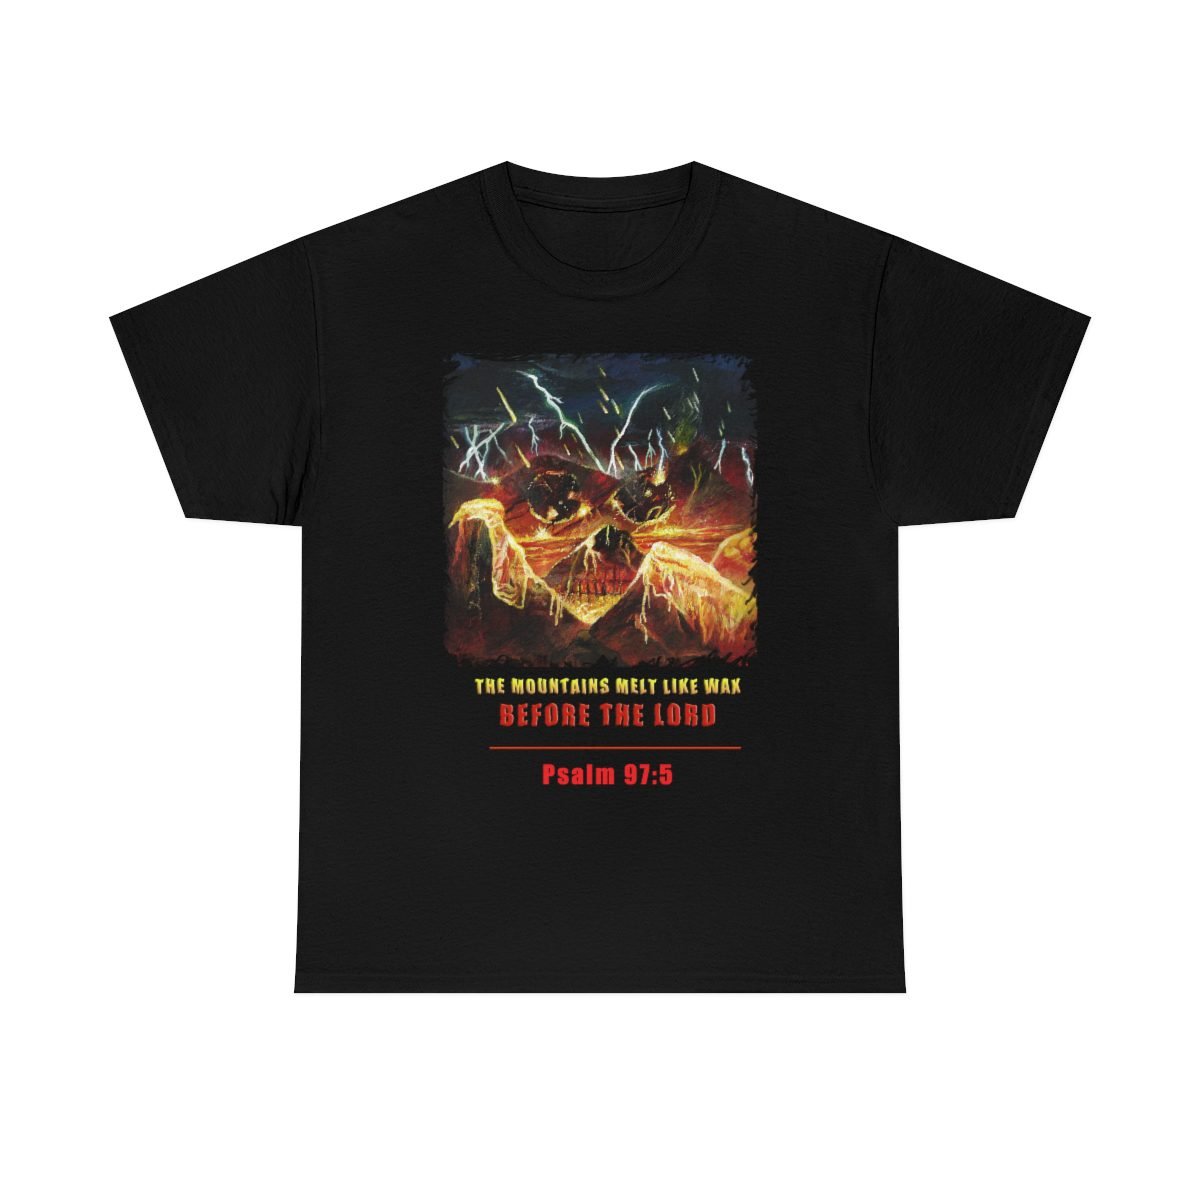 The Art of Ward Silverman – Apocalypse Short Sleeve Tshirt